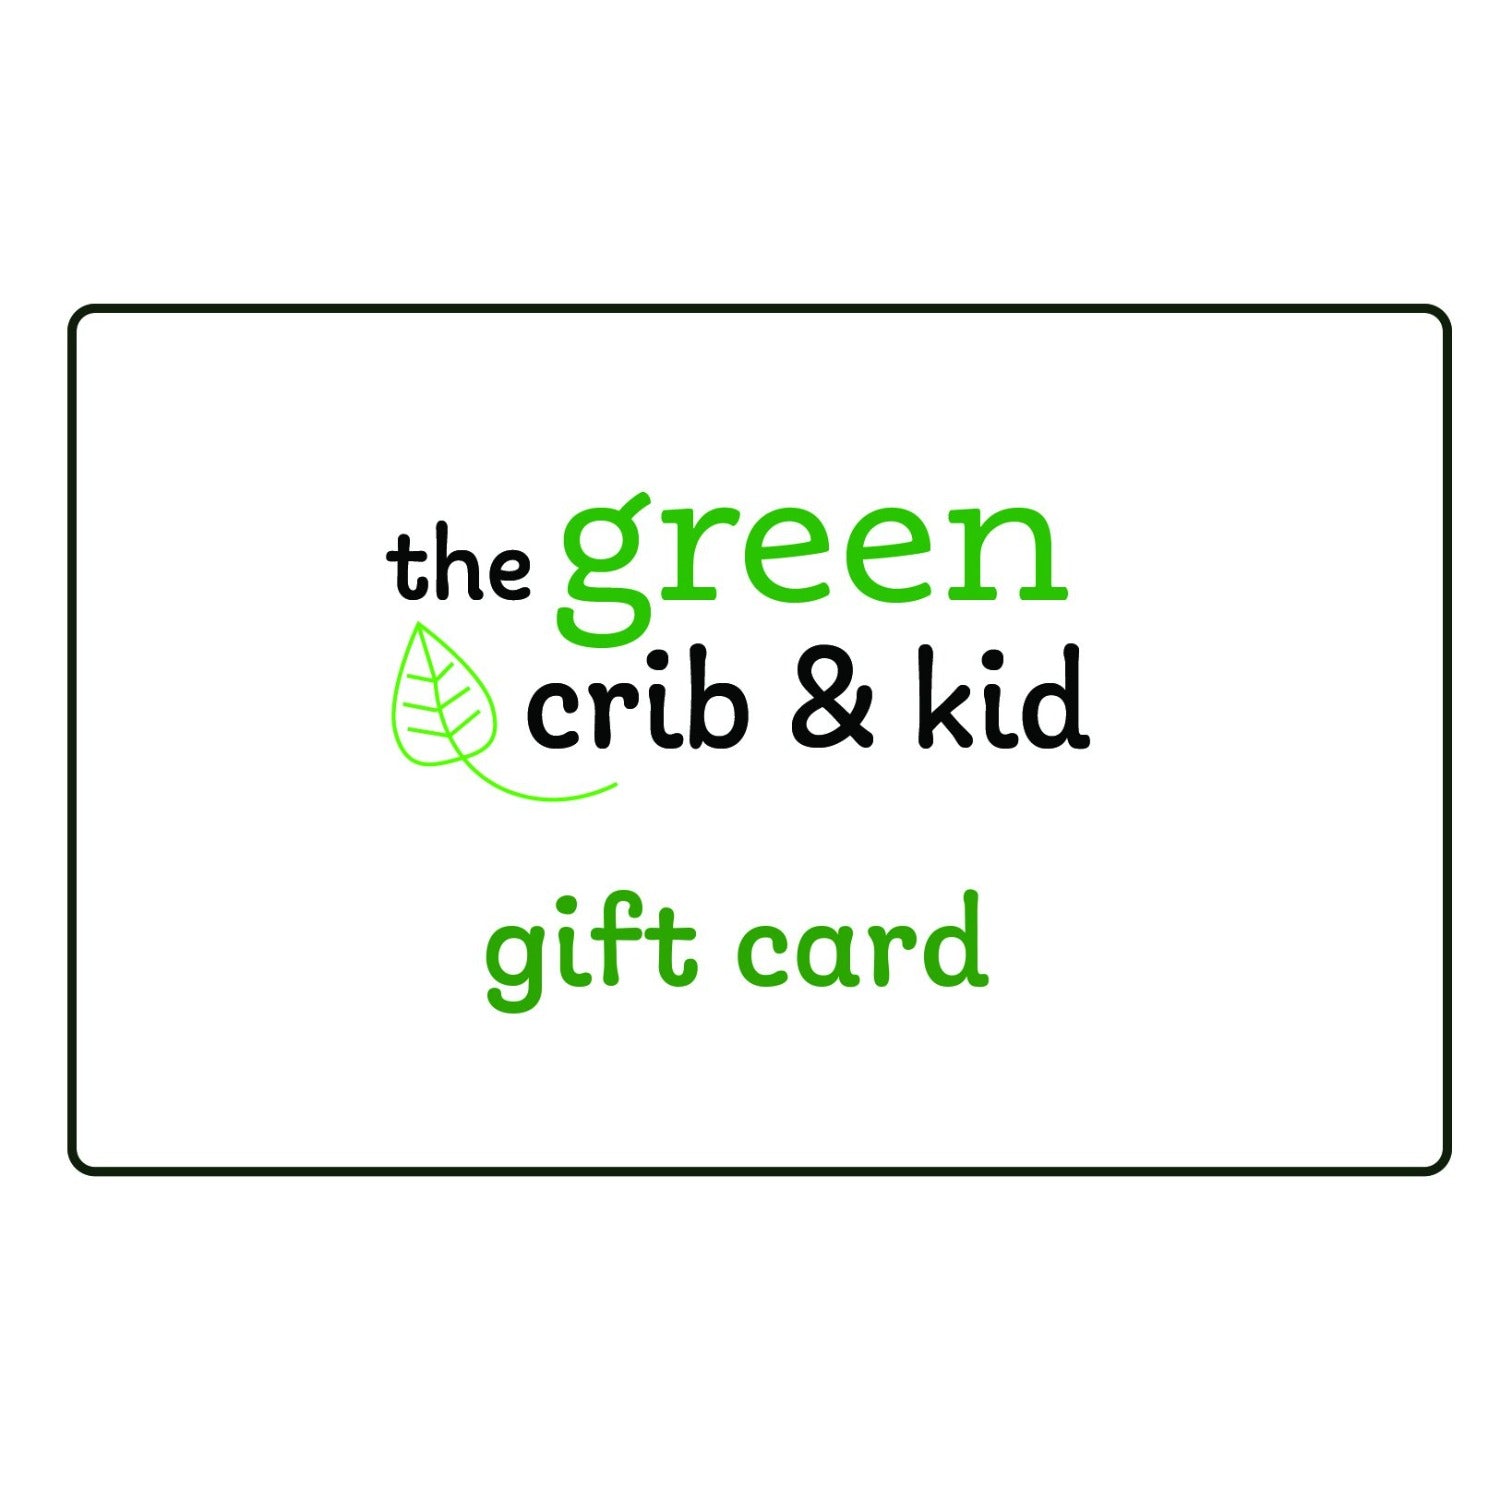 The Green Crib & Kid gift card